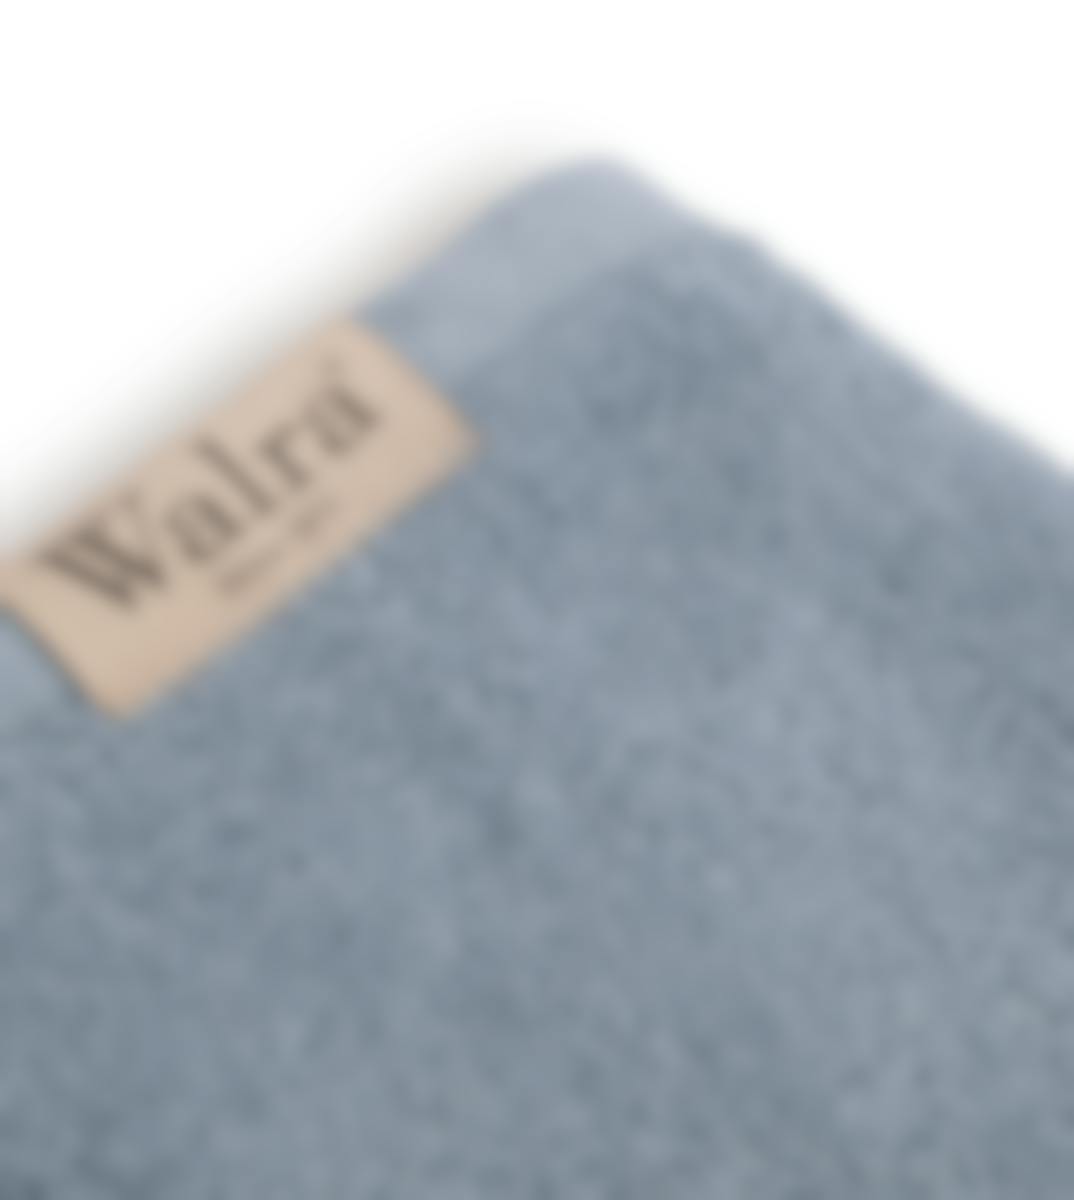 Walra serviette de bain Soft Cotton Bleu 50 x 100 cm